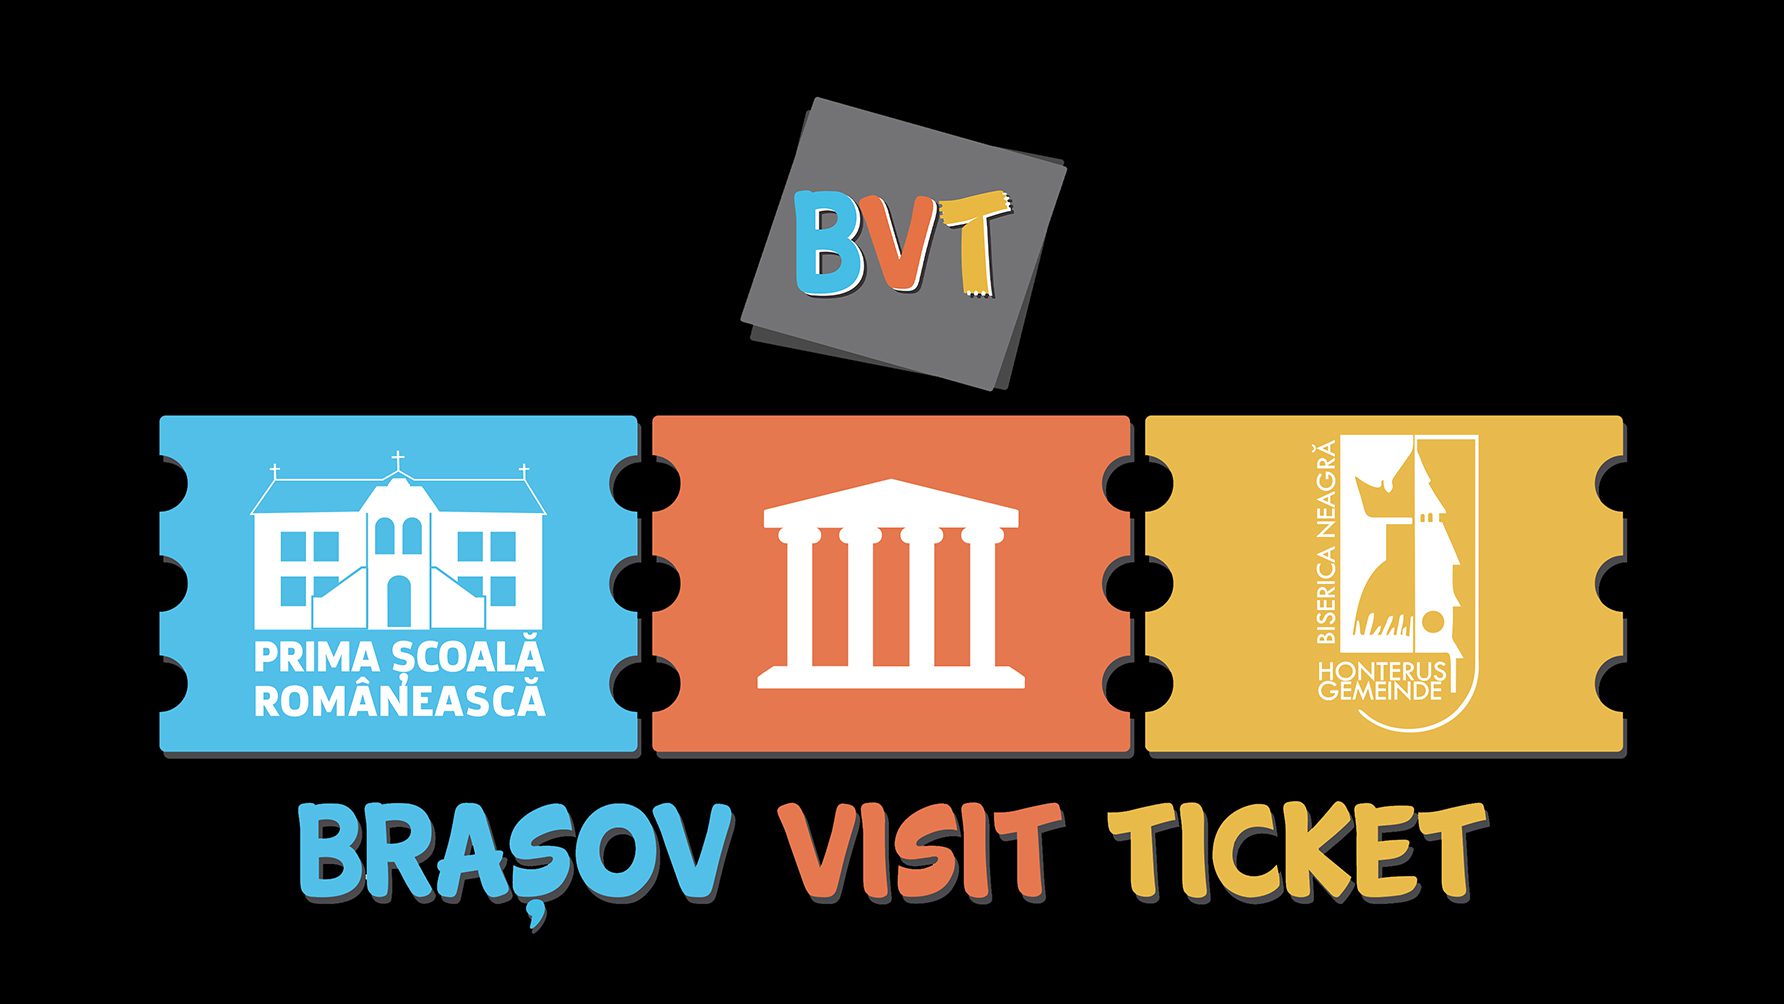 Brasov visit ticket BVT